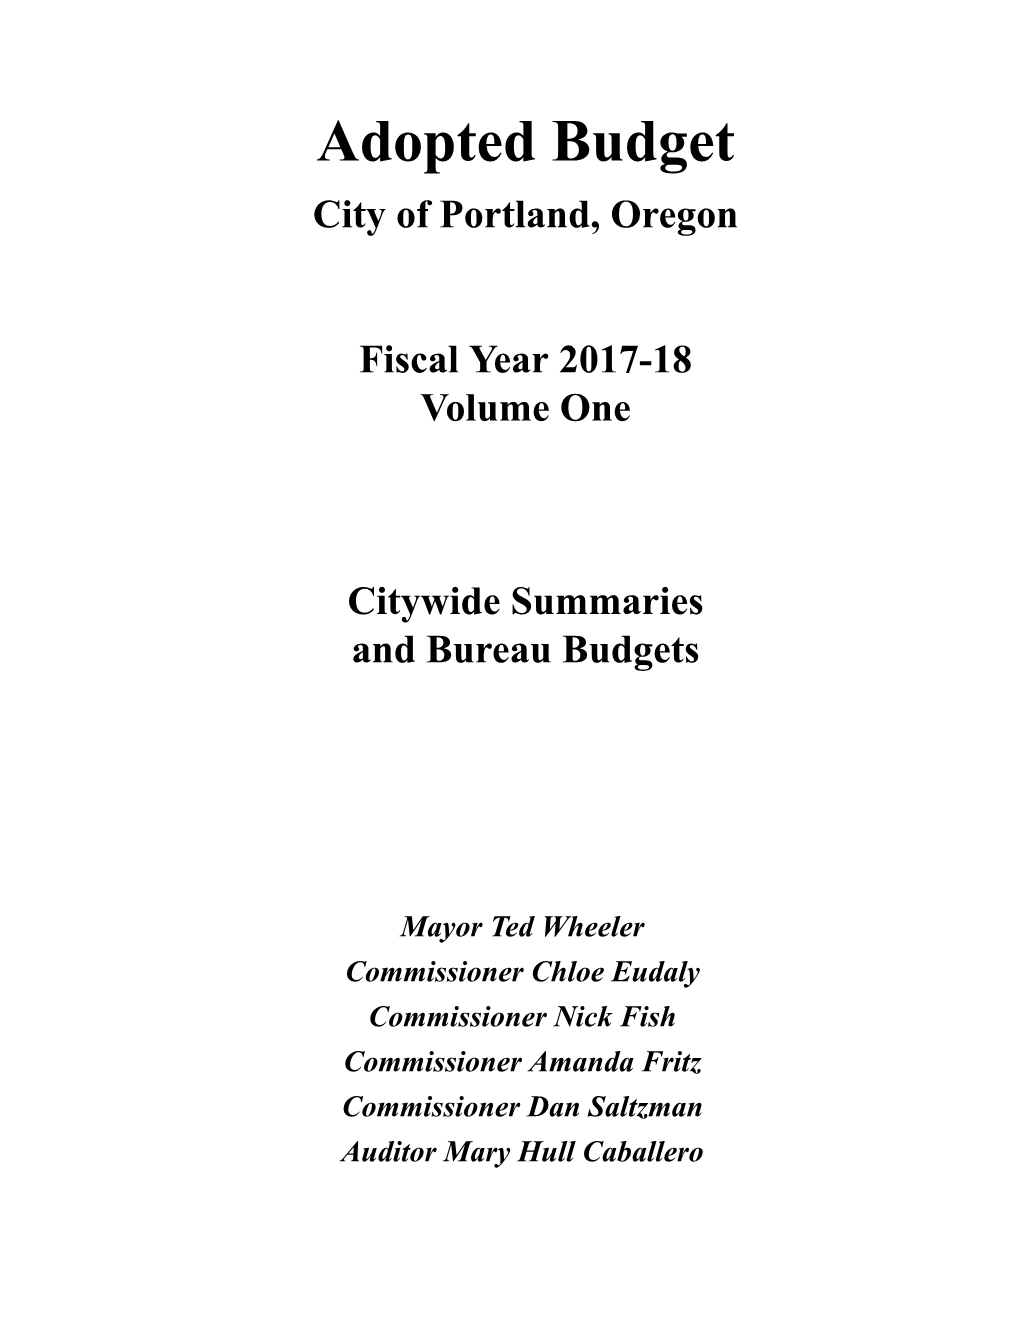 Citywide Summaries & Bureau Budgets